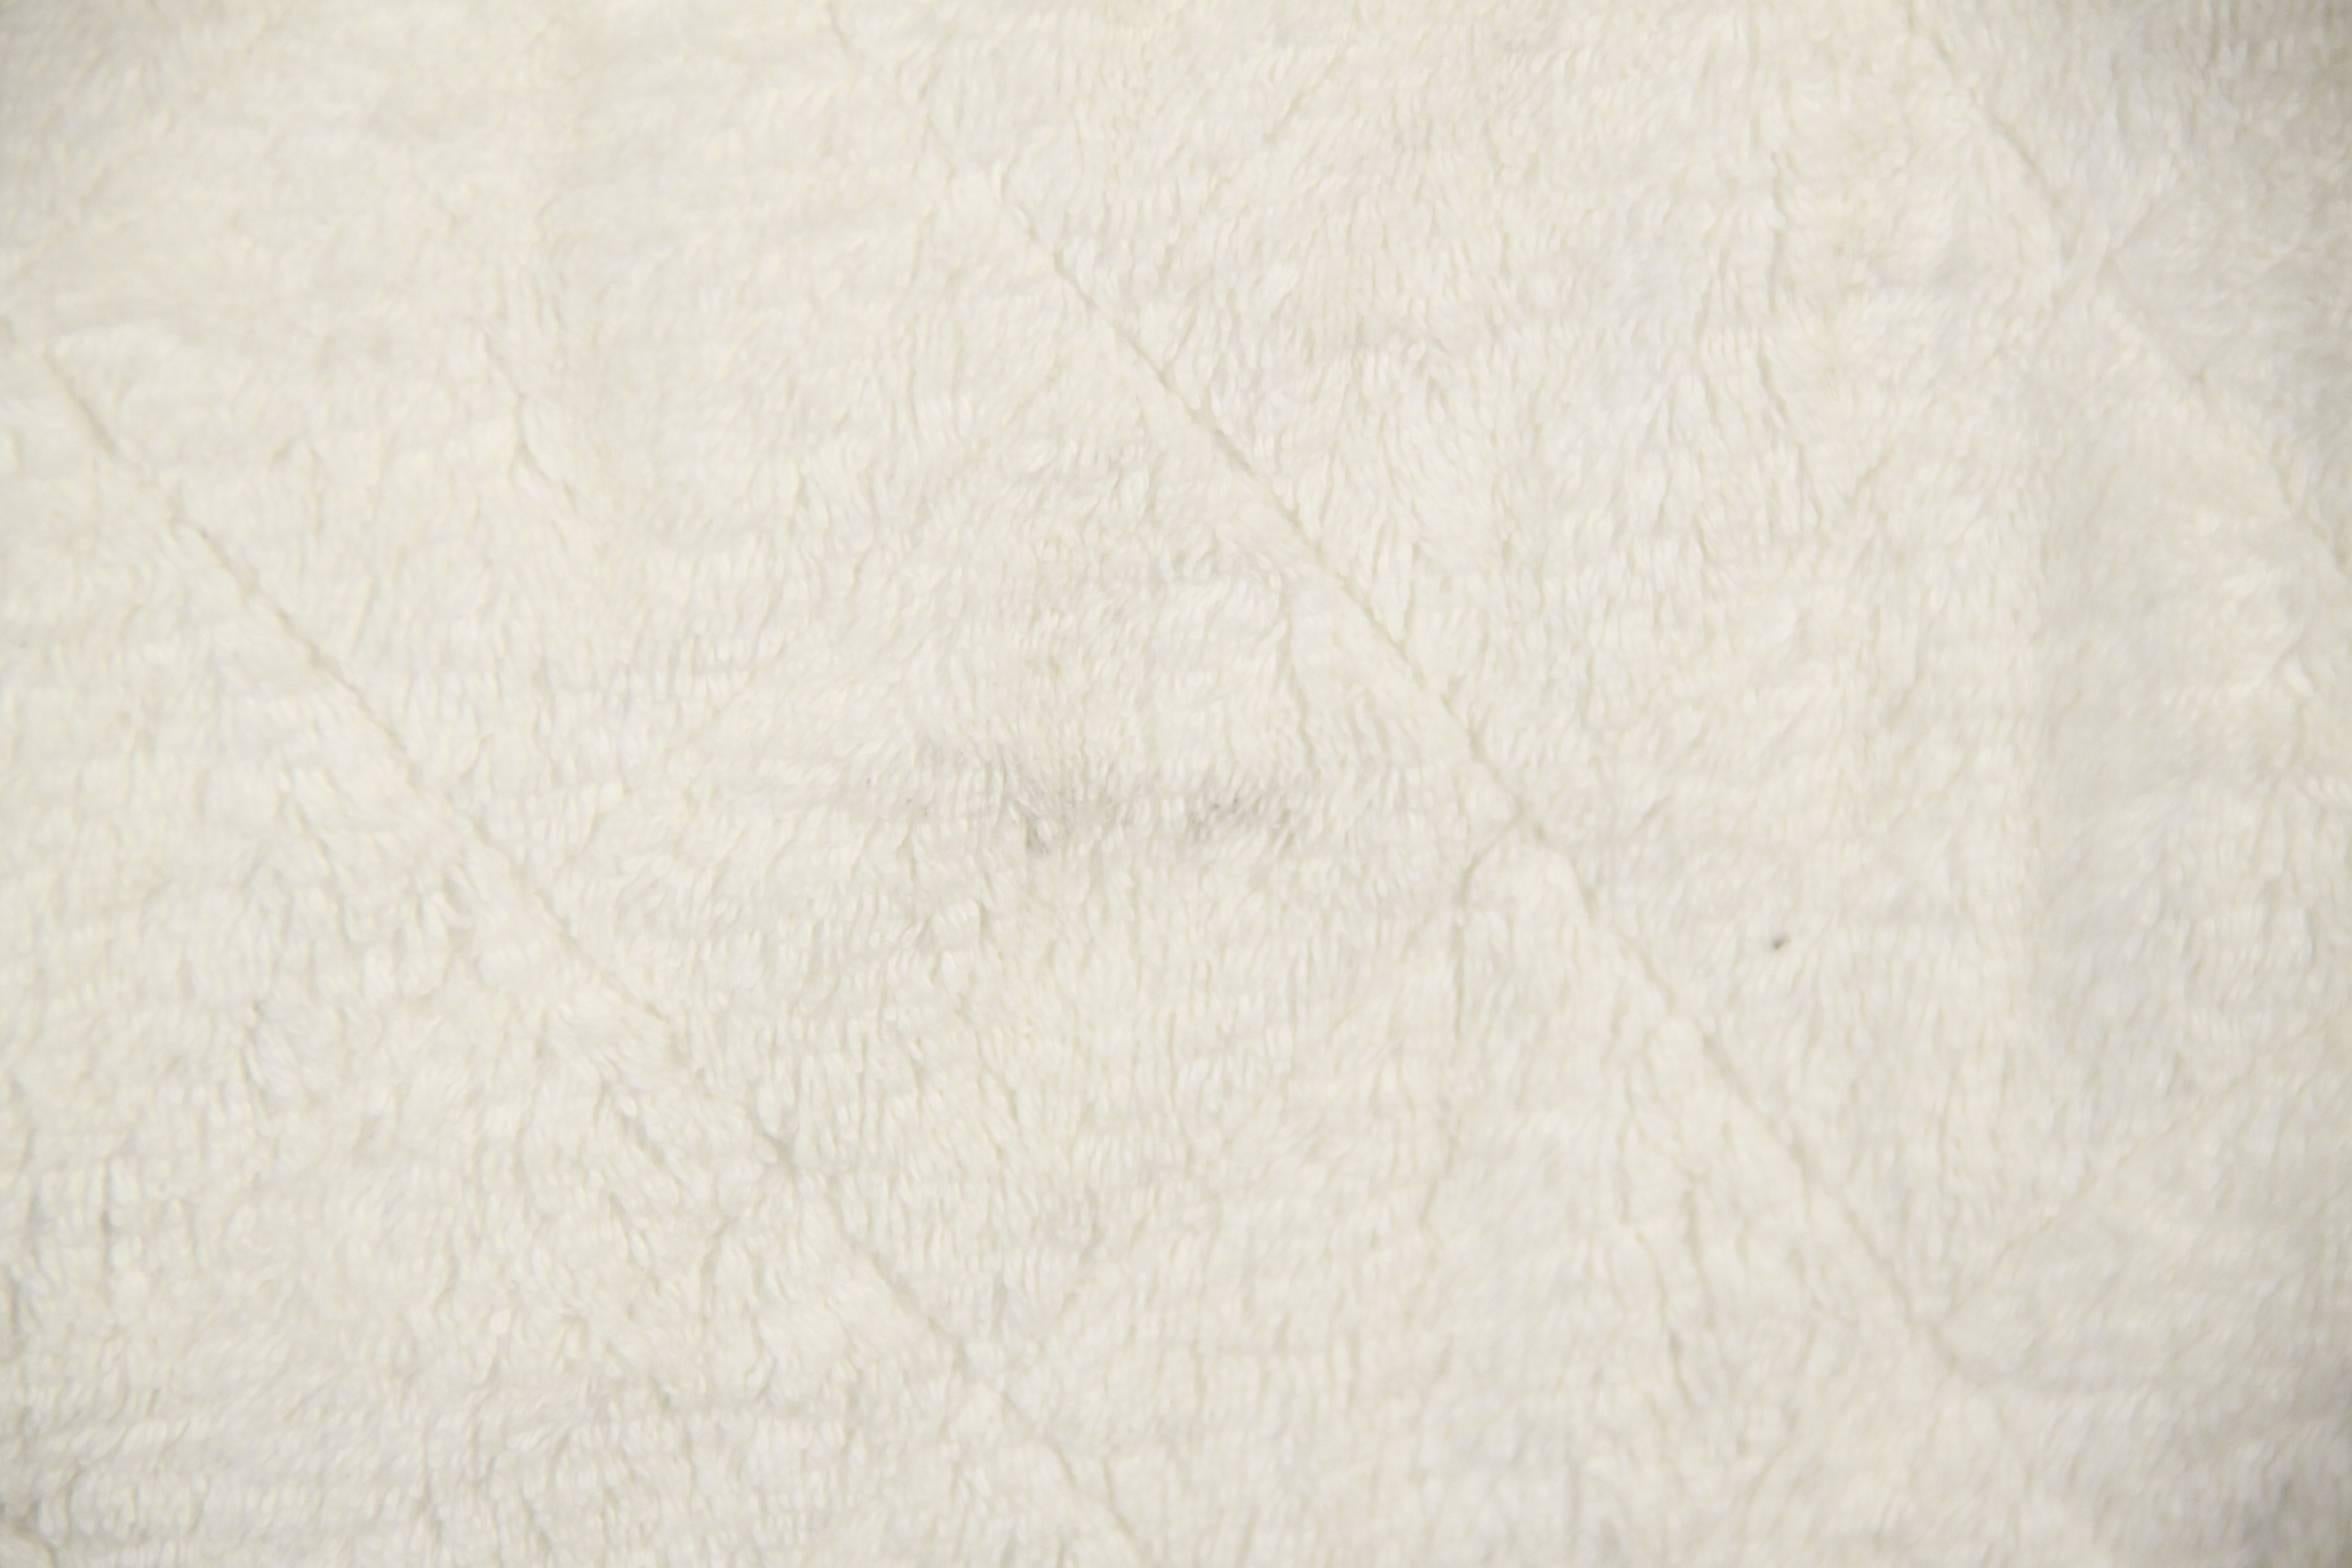 HERMES PARIS White Terry Cloth Cotton BEACH BAG w/ Embroidered Tiger 4